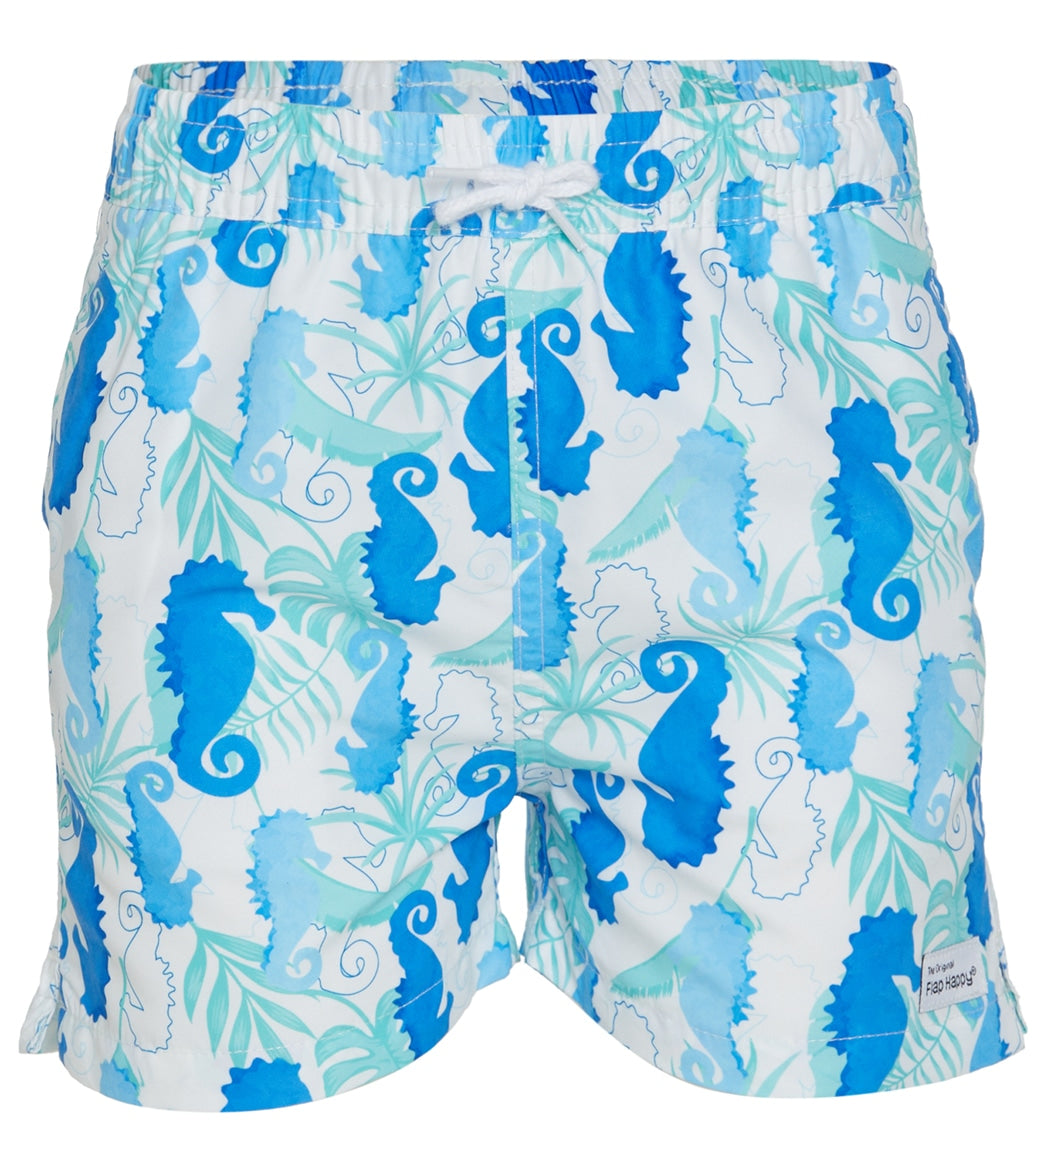 Flap Happy Boys Seahorse Reef Wesley UPF 50+ Swim Trunks (Baby, Toddler, Little Kid)